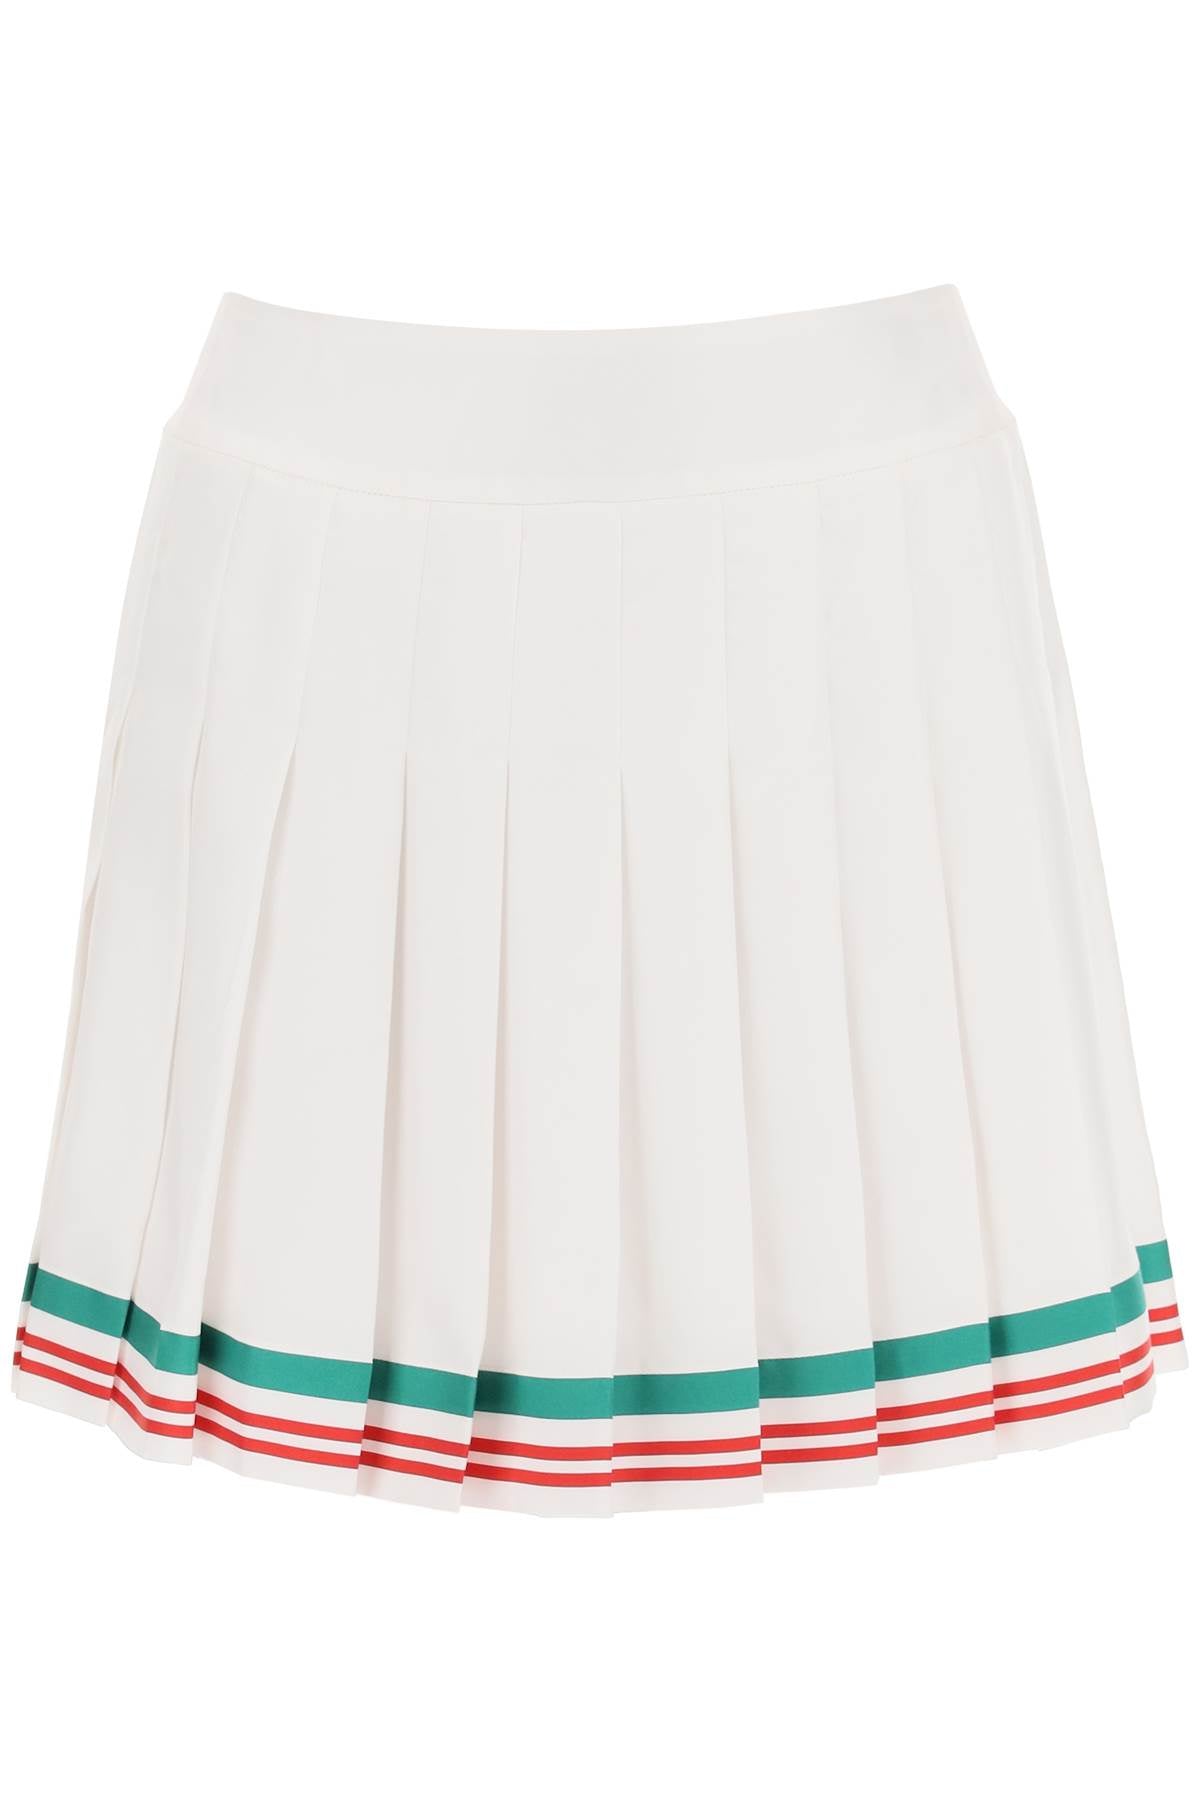 CASABLANCA Chic and Stylish Tennis Mini Skirt for Women